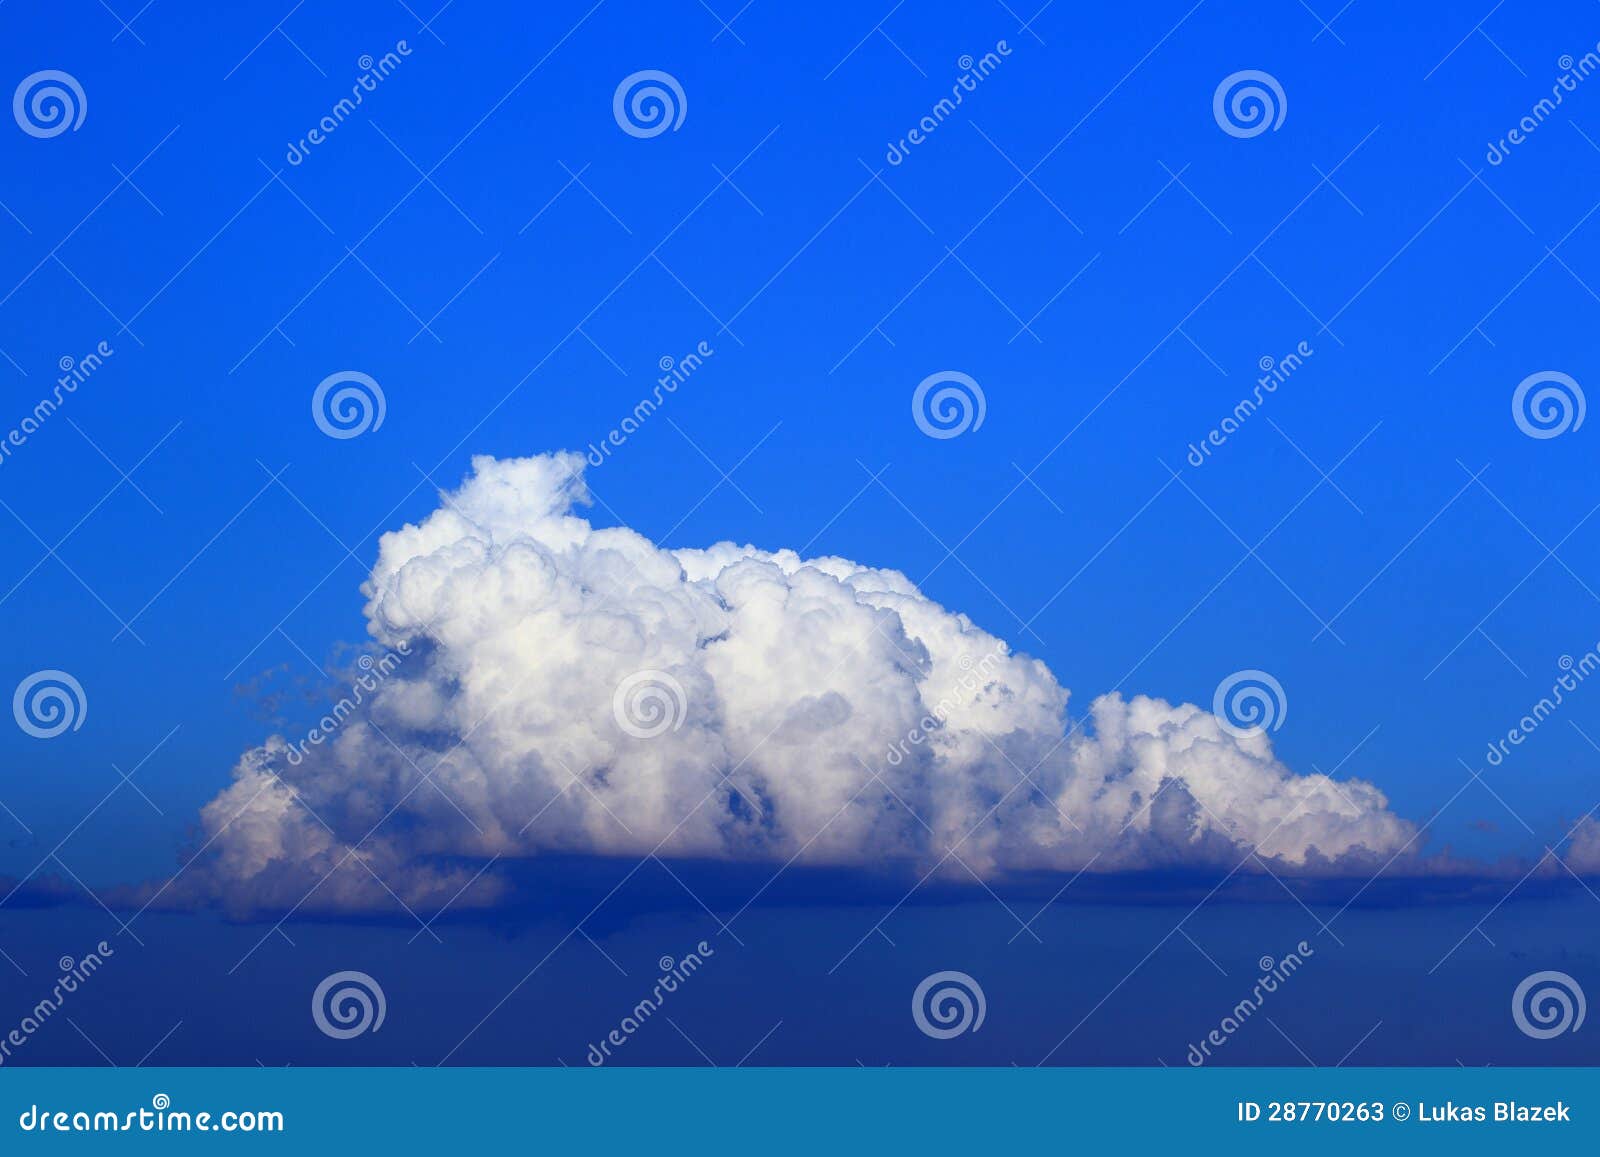 towering cumulus cloud